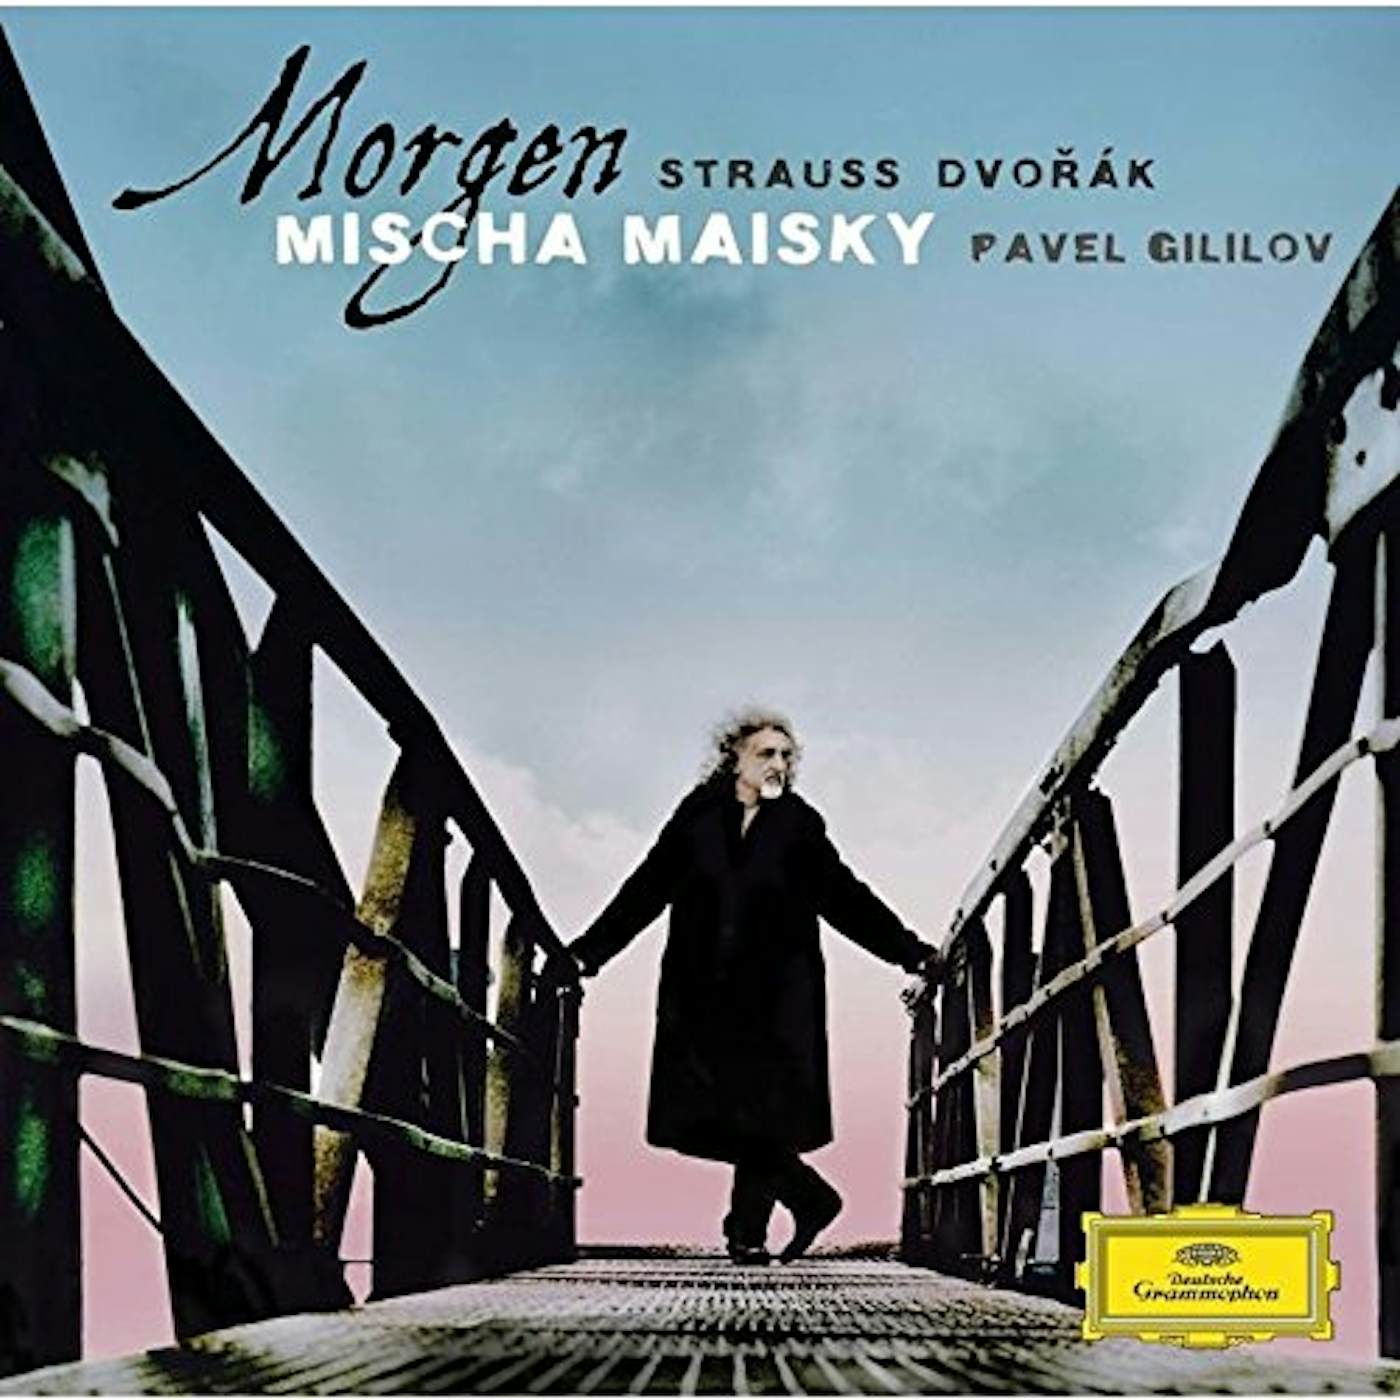 Mischa Maisky MORGEN STRAUSS DVORAK CD